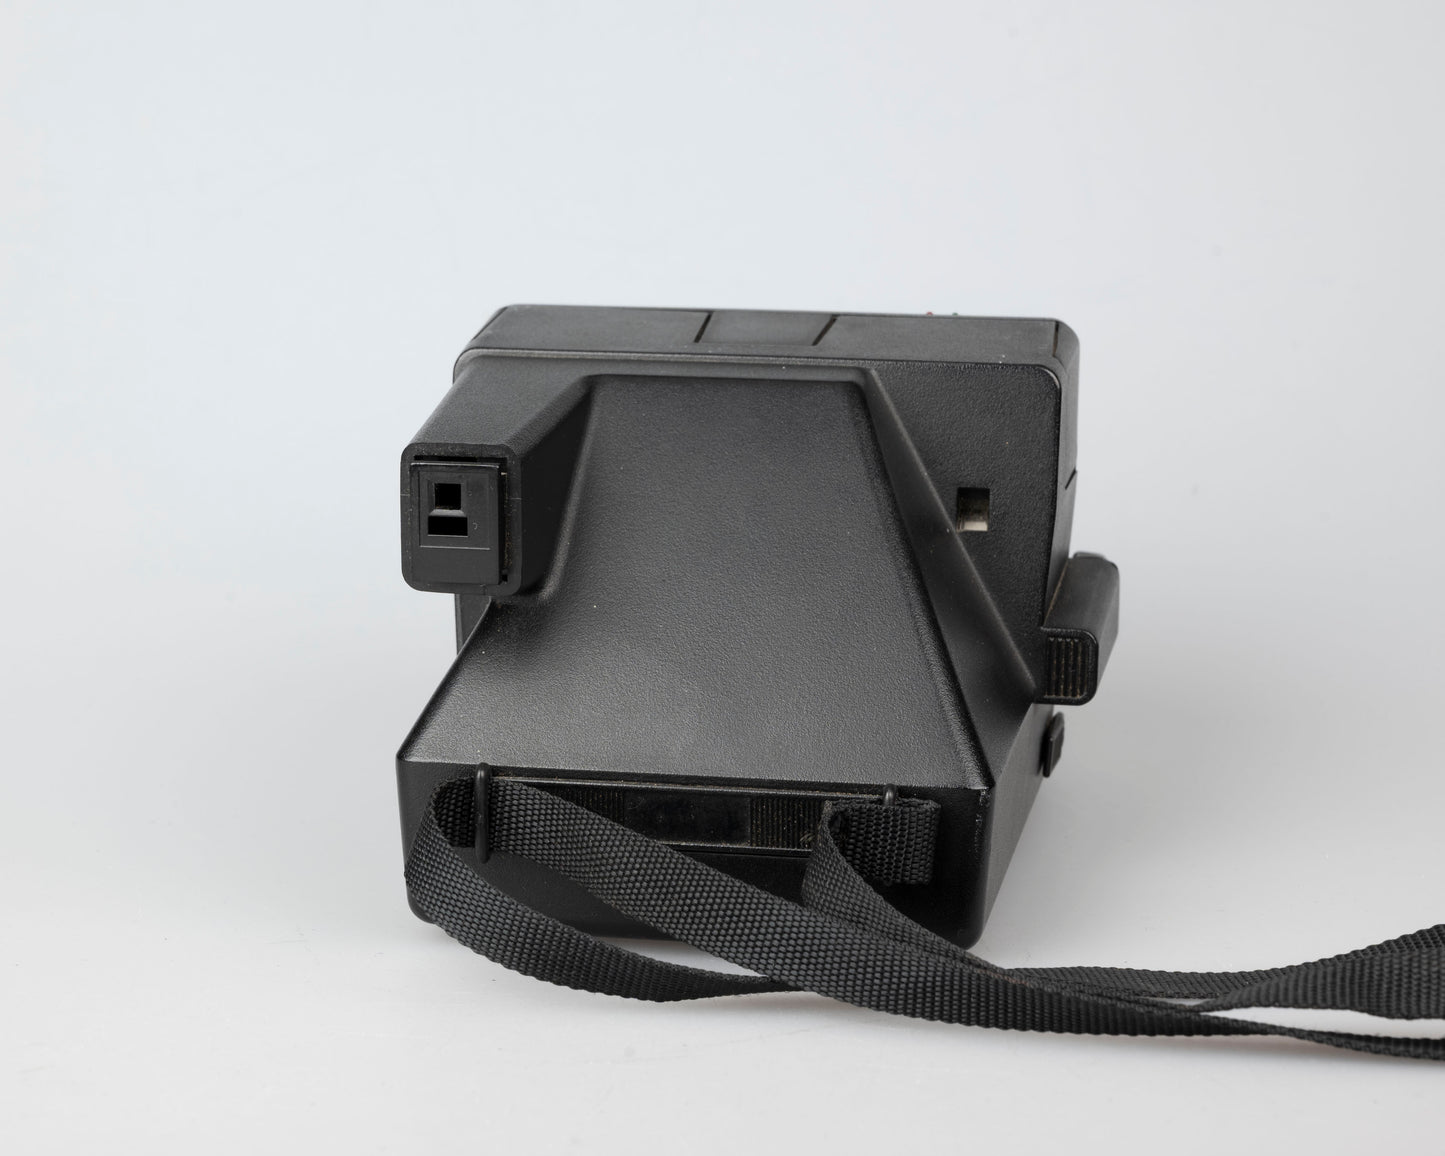 Polaroid Sun 600 LMS instant film camera (serial D7P25972NG)